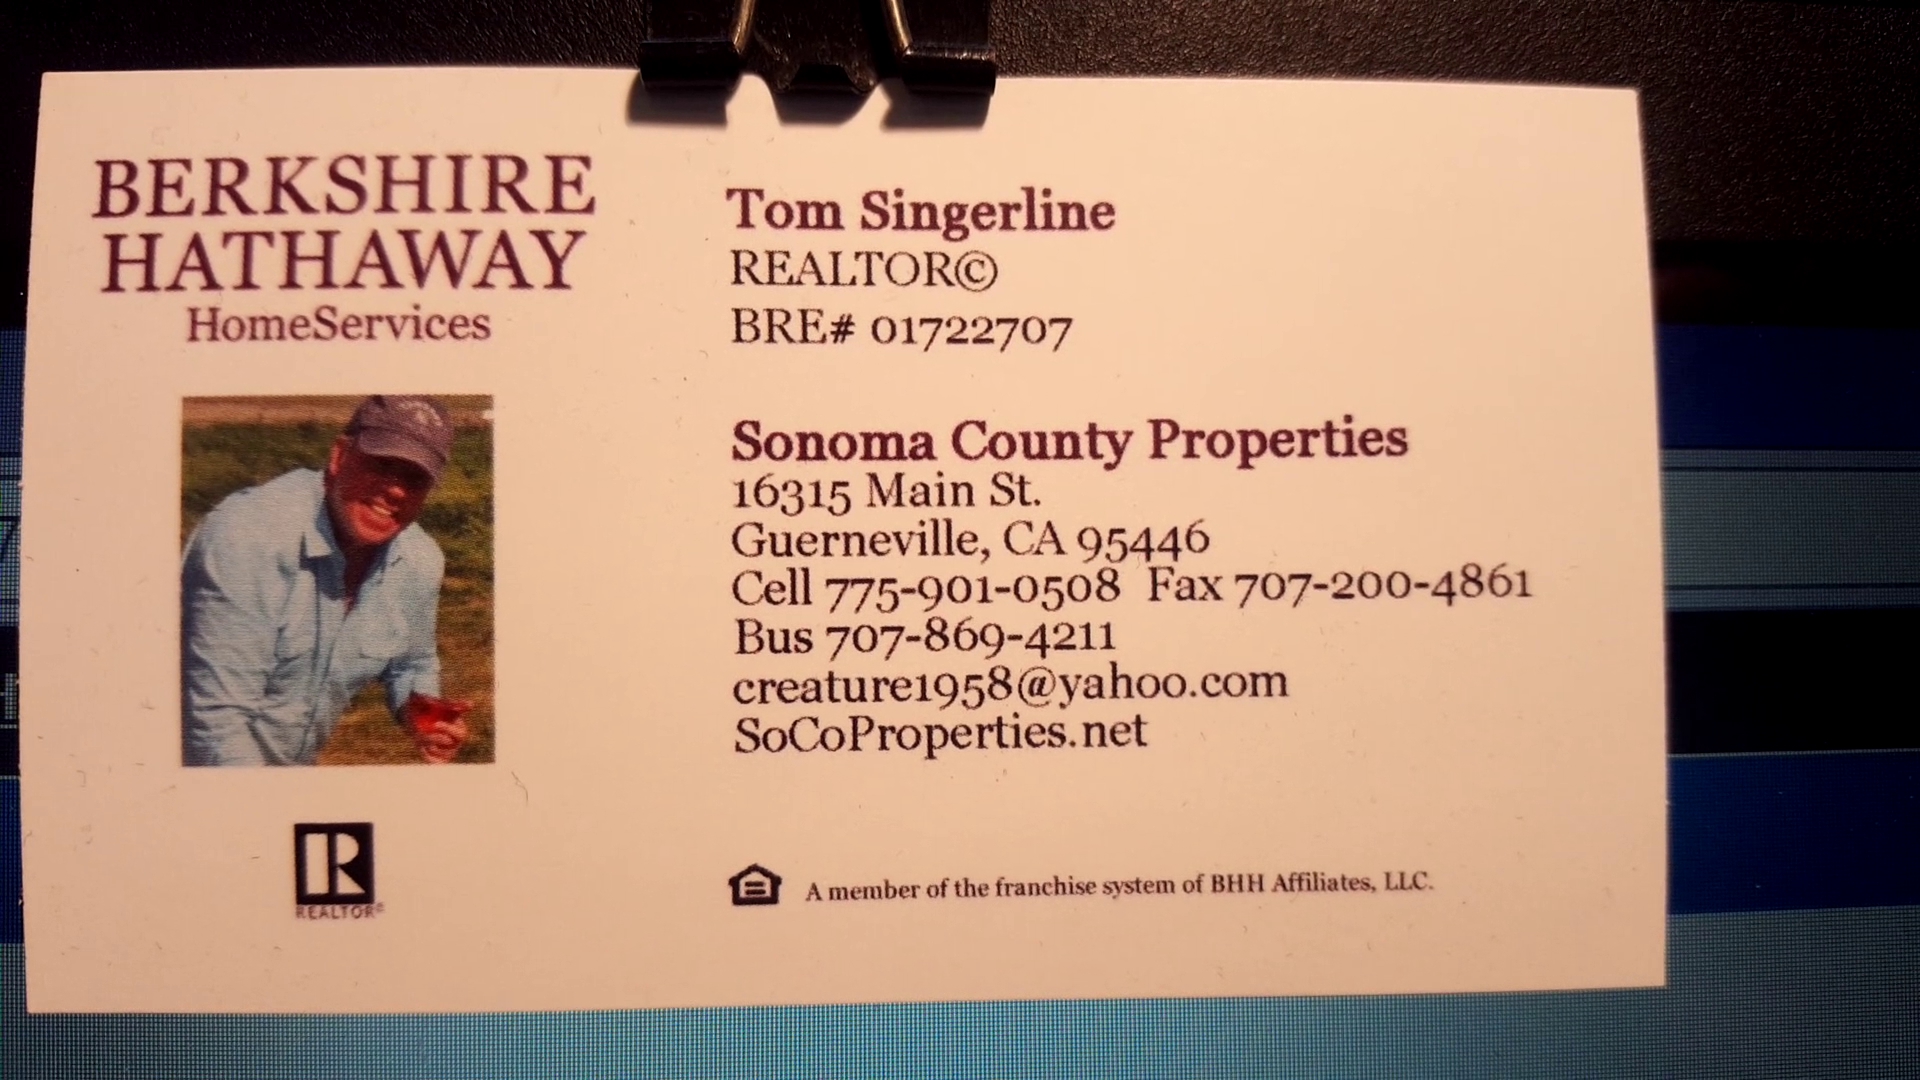 Berkshire Hathaway HS Sonoma County Properties